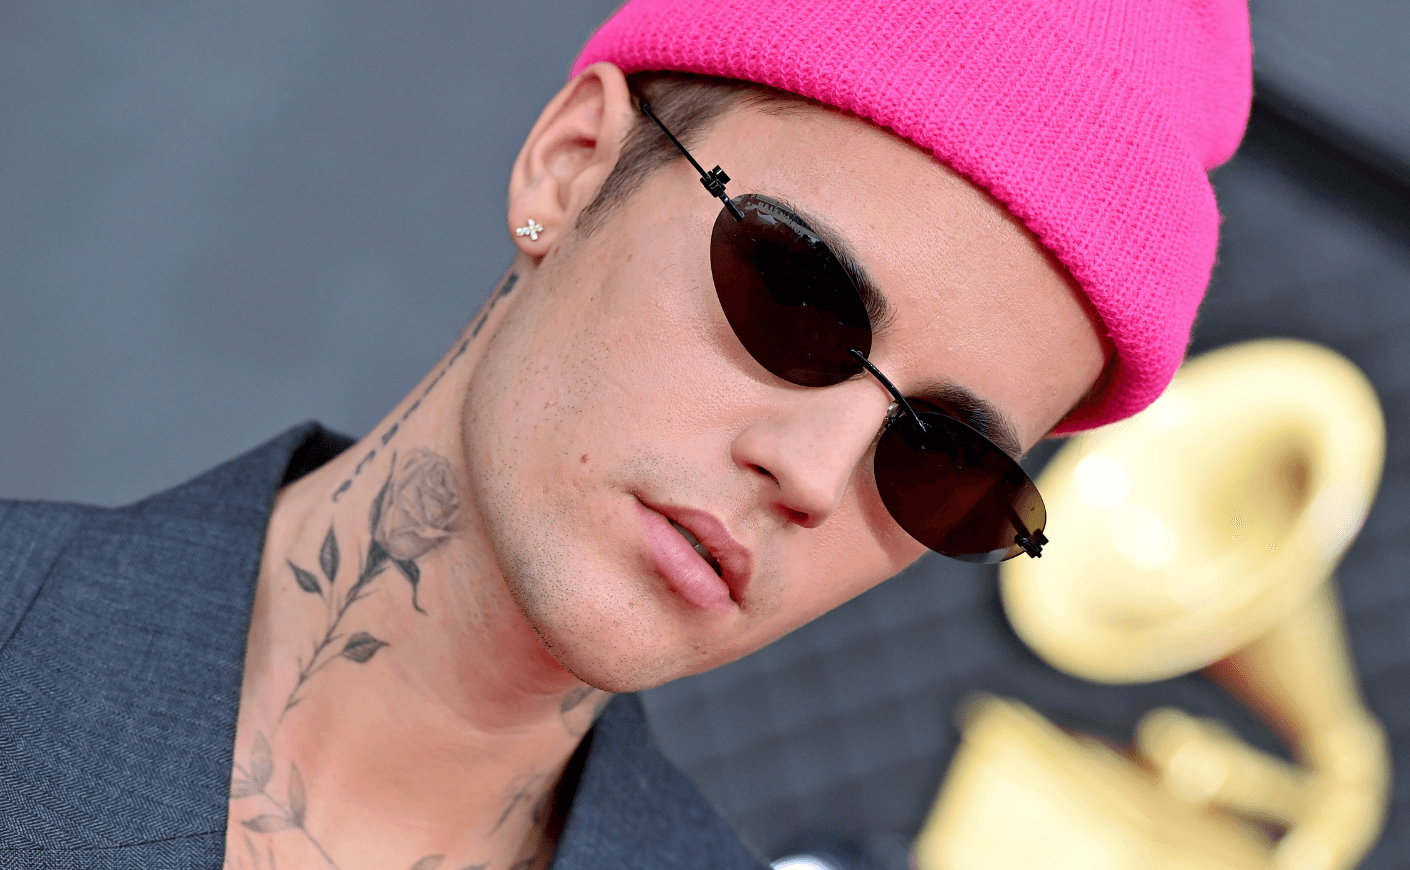 Justin Bieber in a pink hat